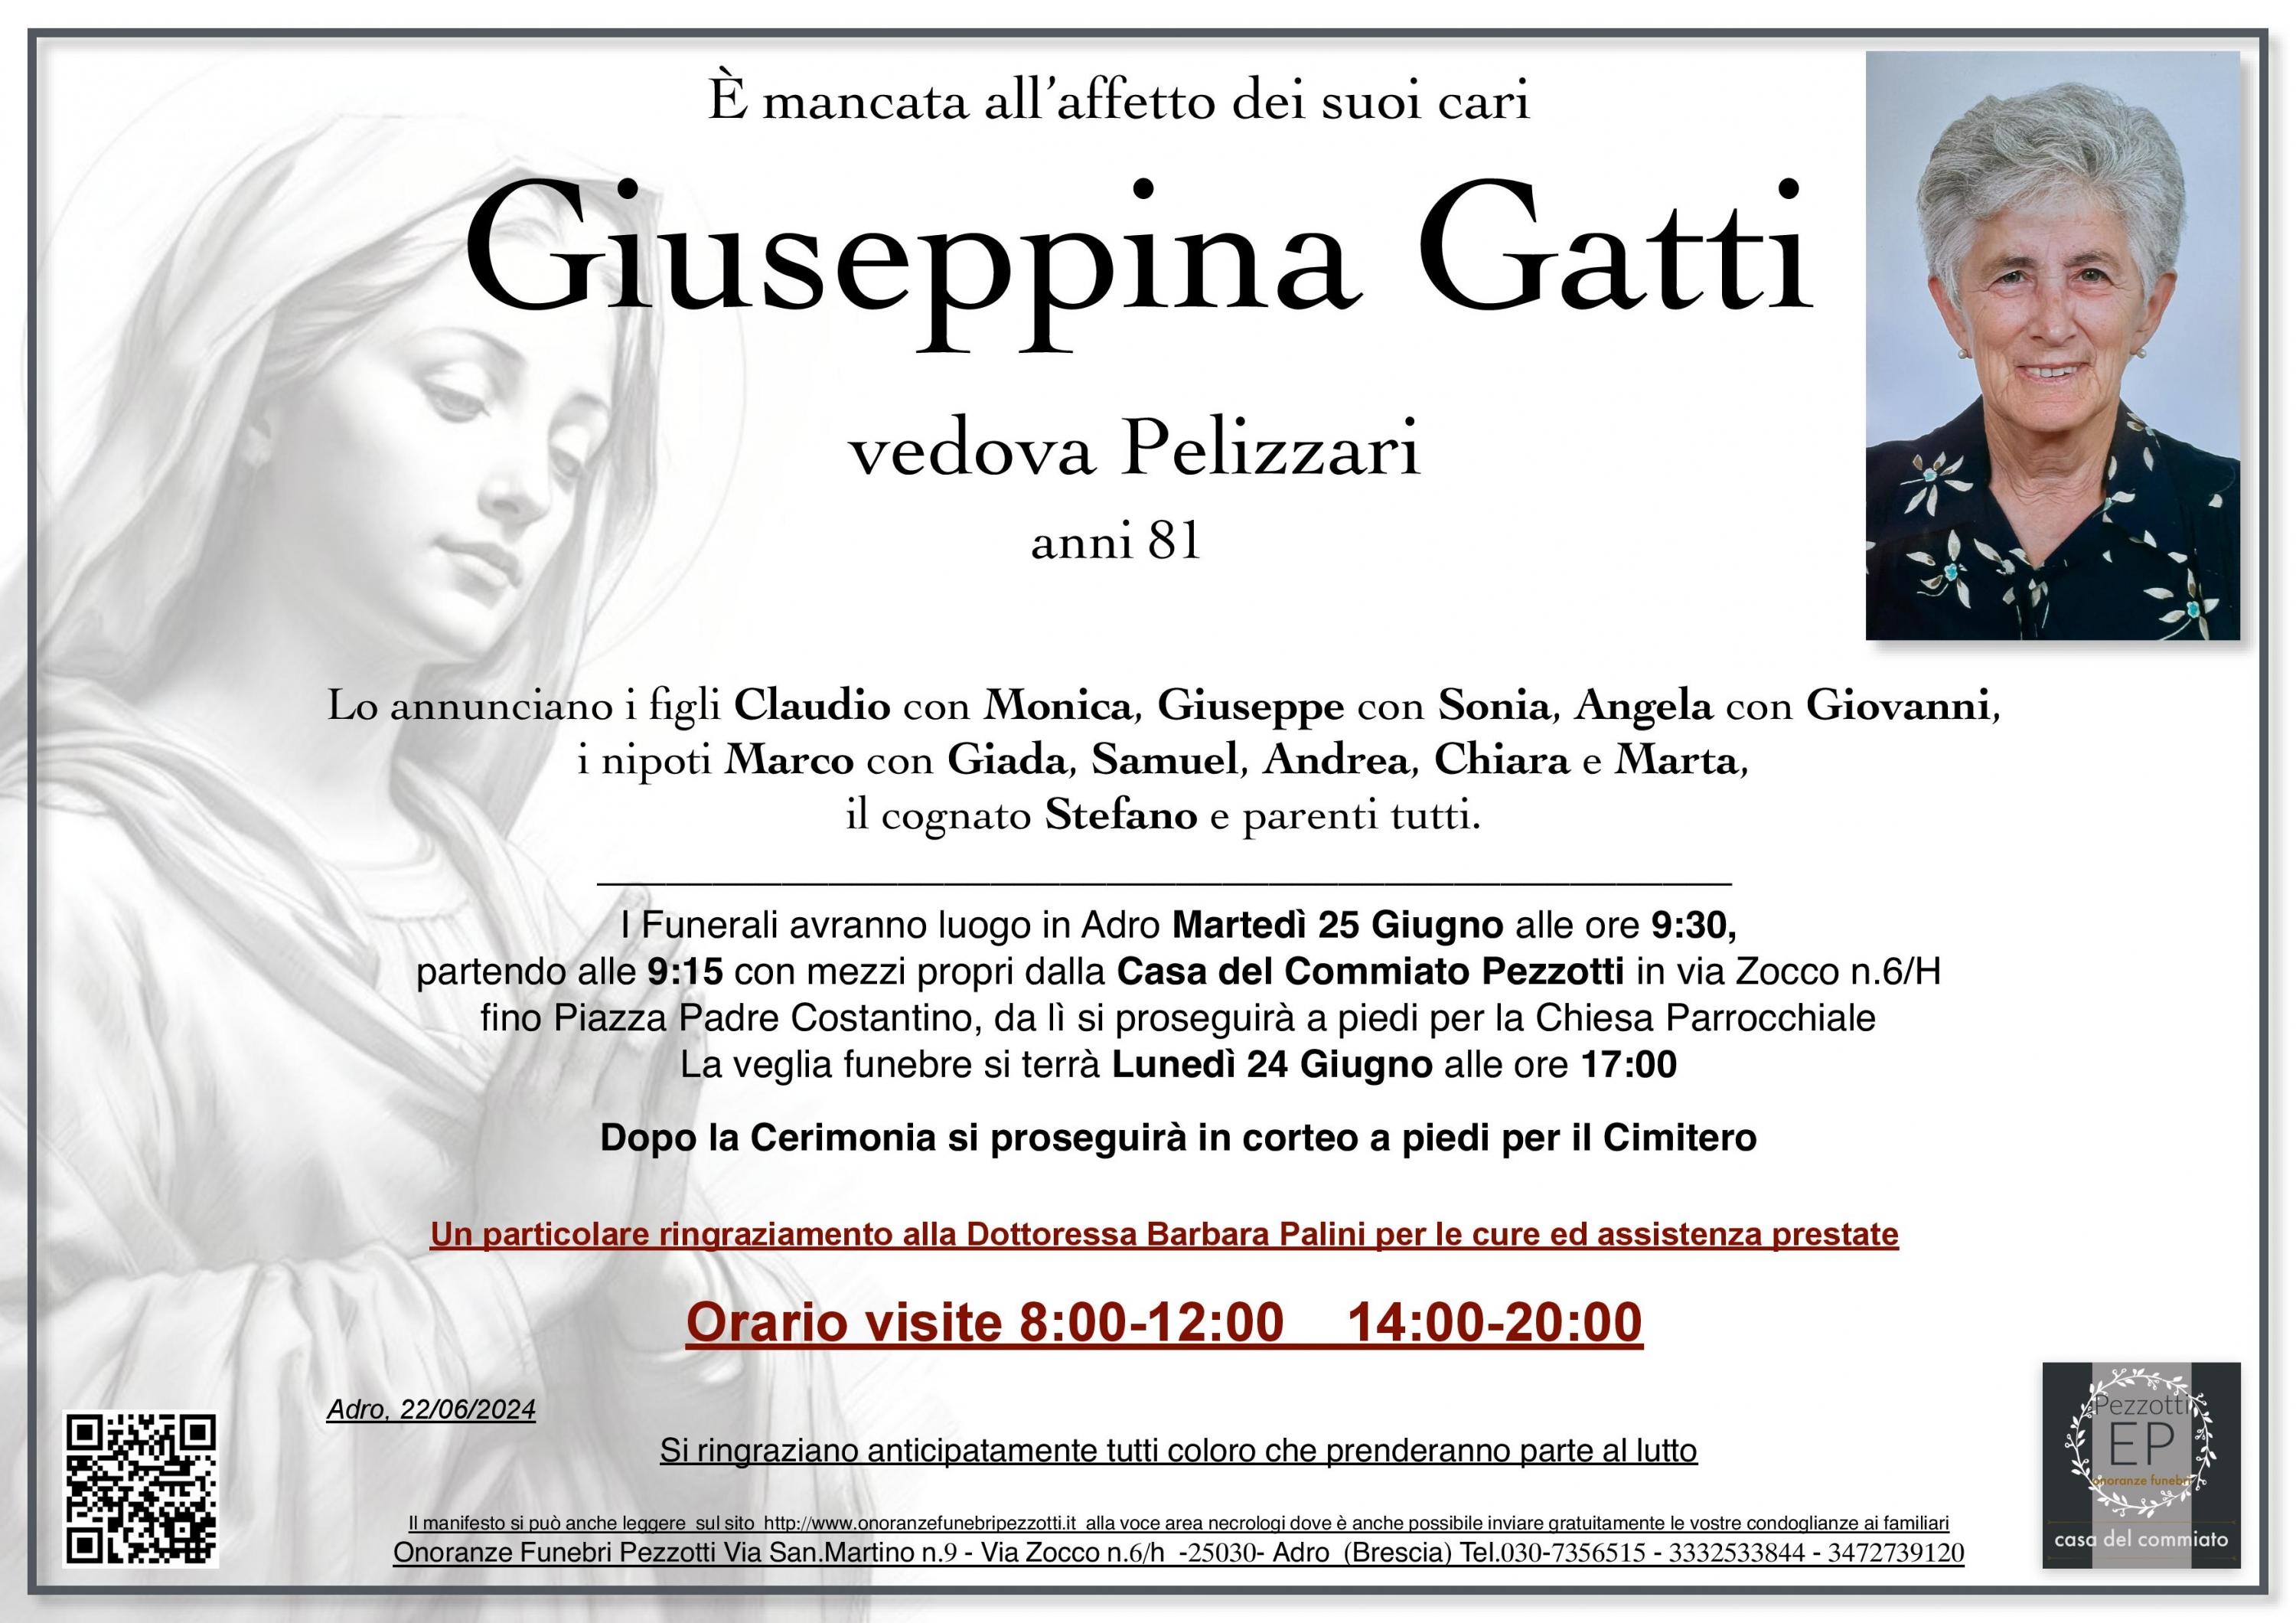 Giuseppina Gatti ved. Pelizzari